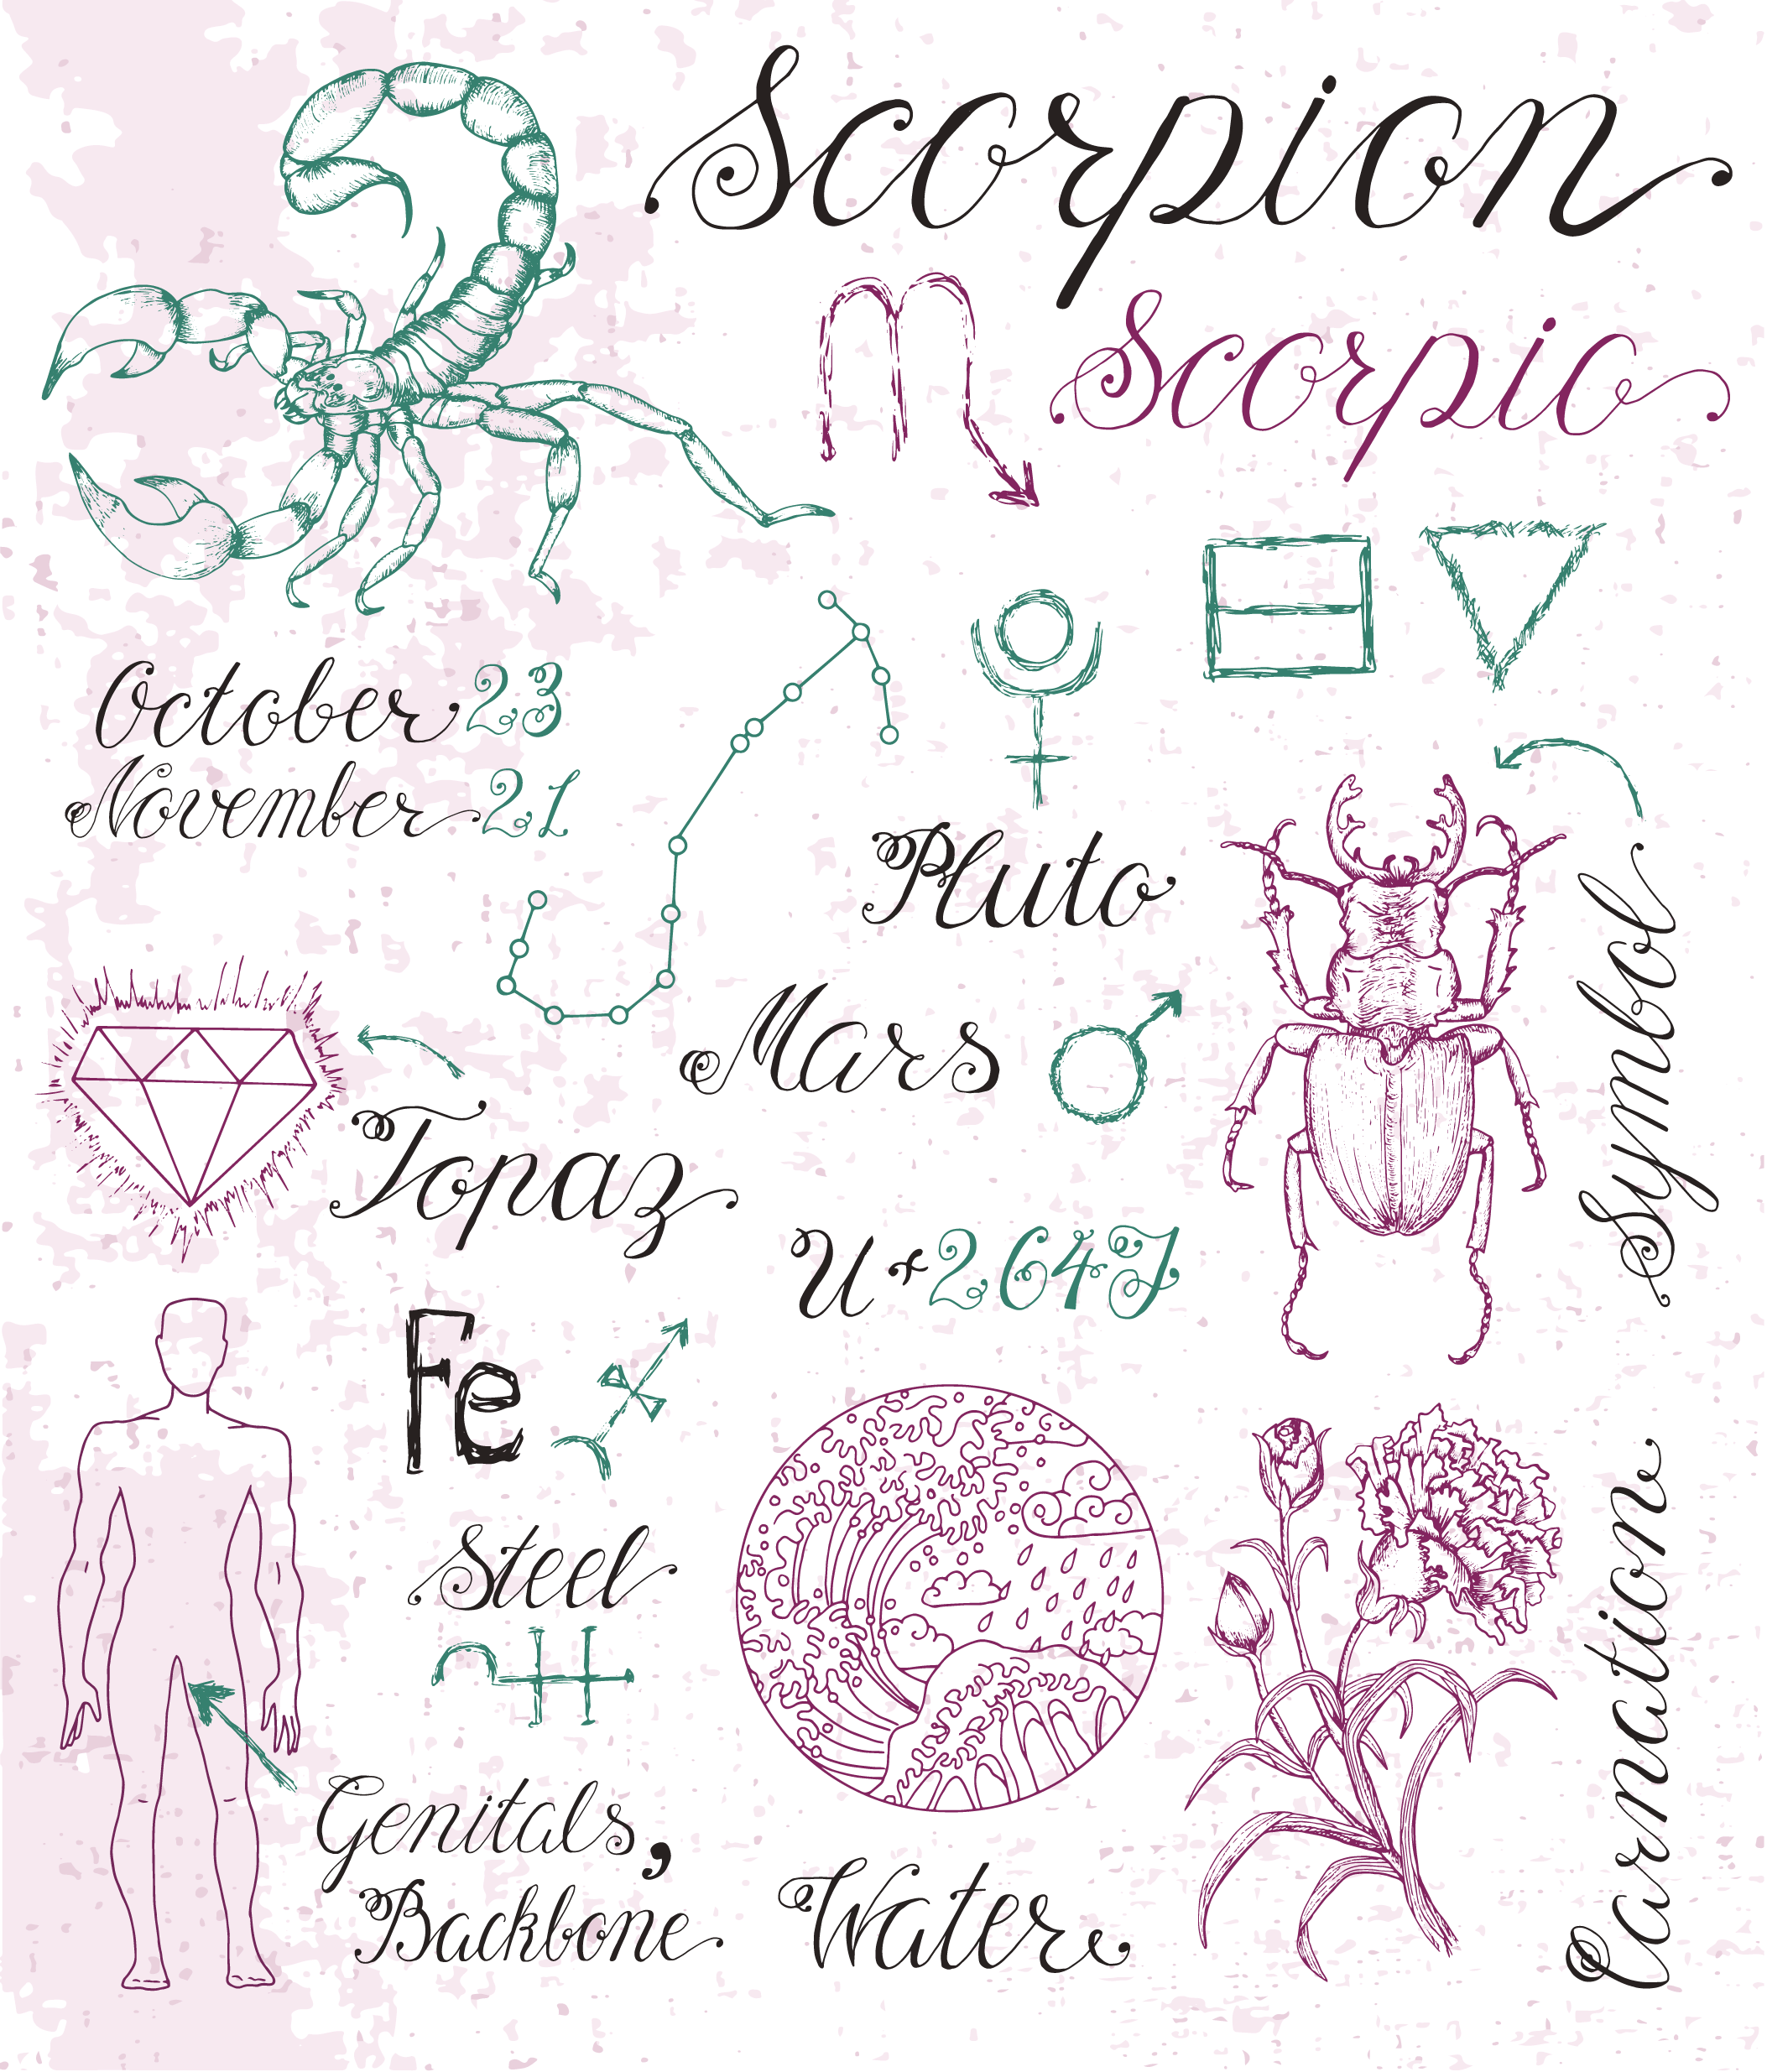 Astrology Zodiac Sign Scorpio